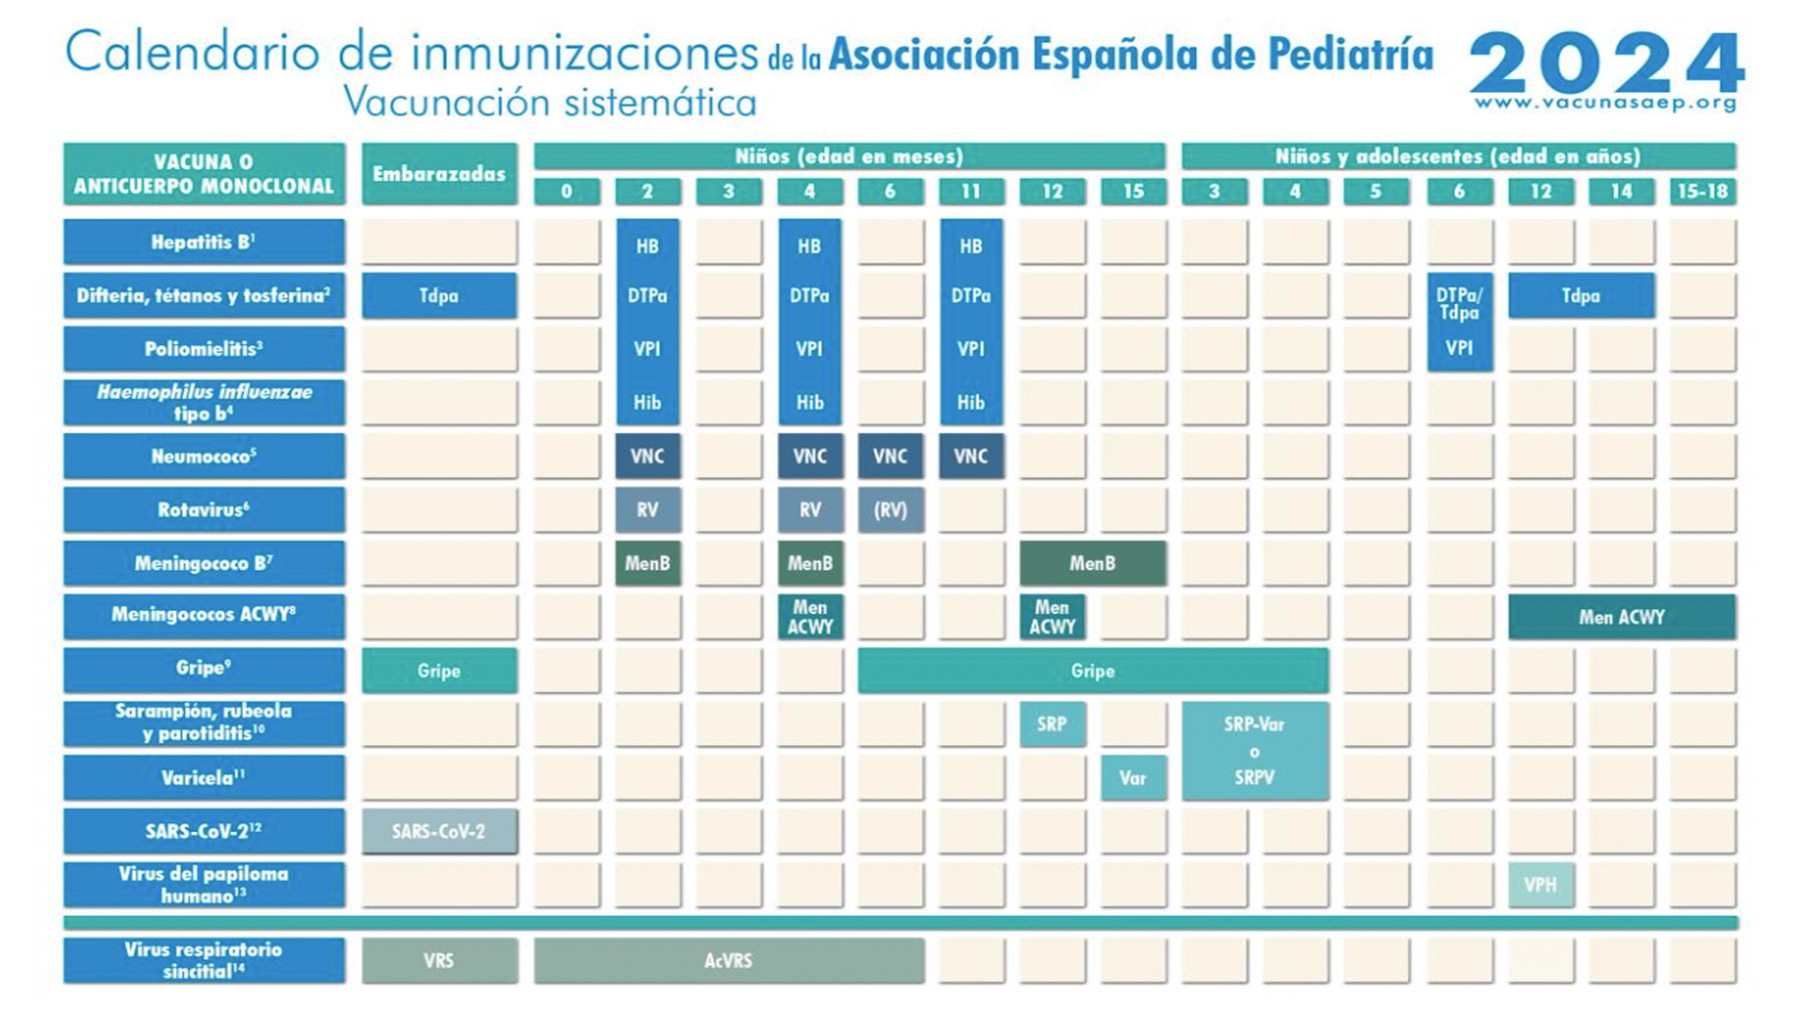 Nuevo calendario vacunal en España para 2024.